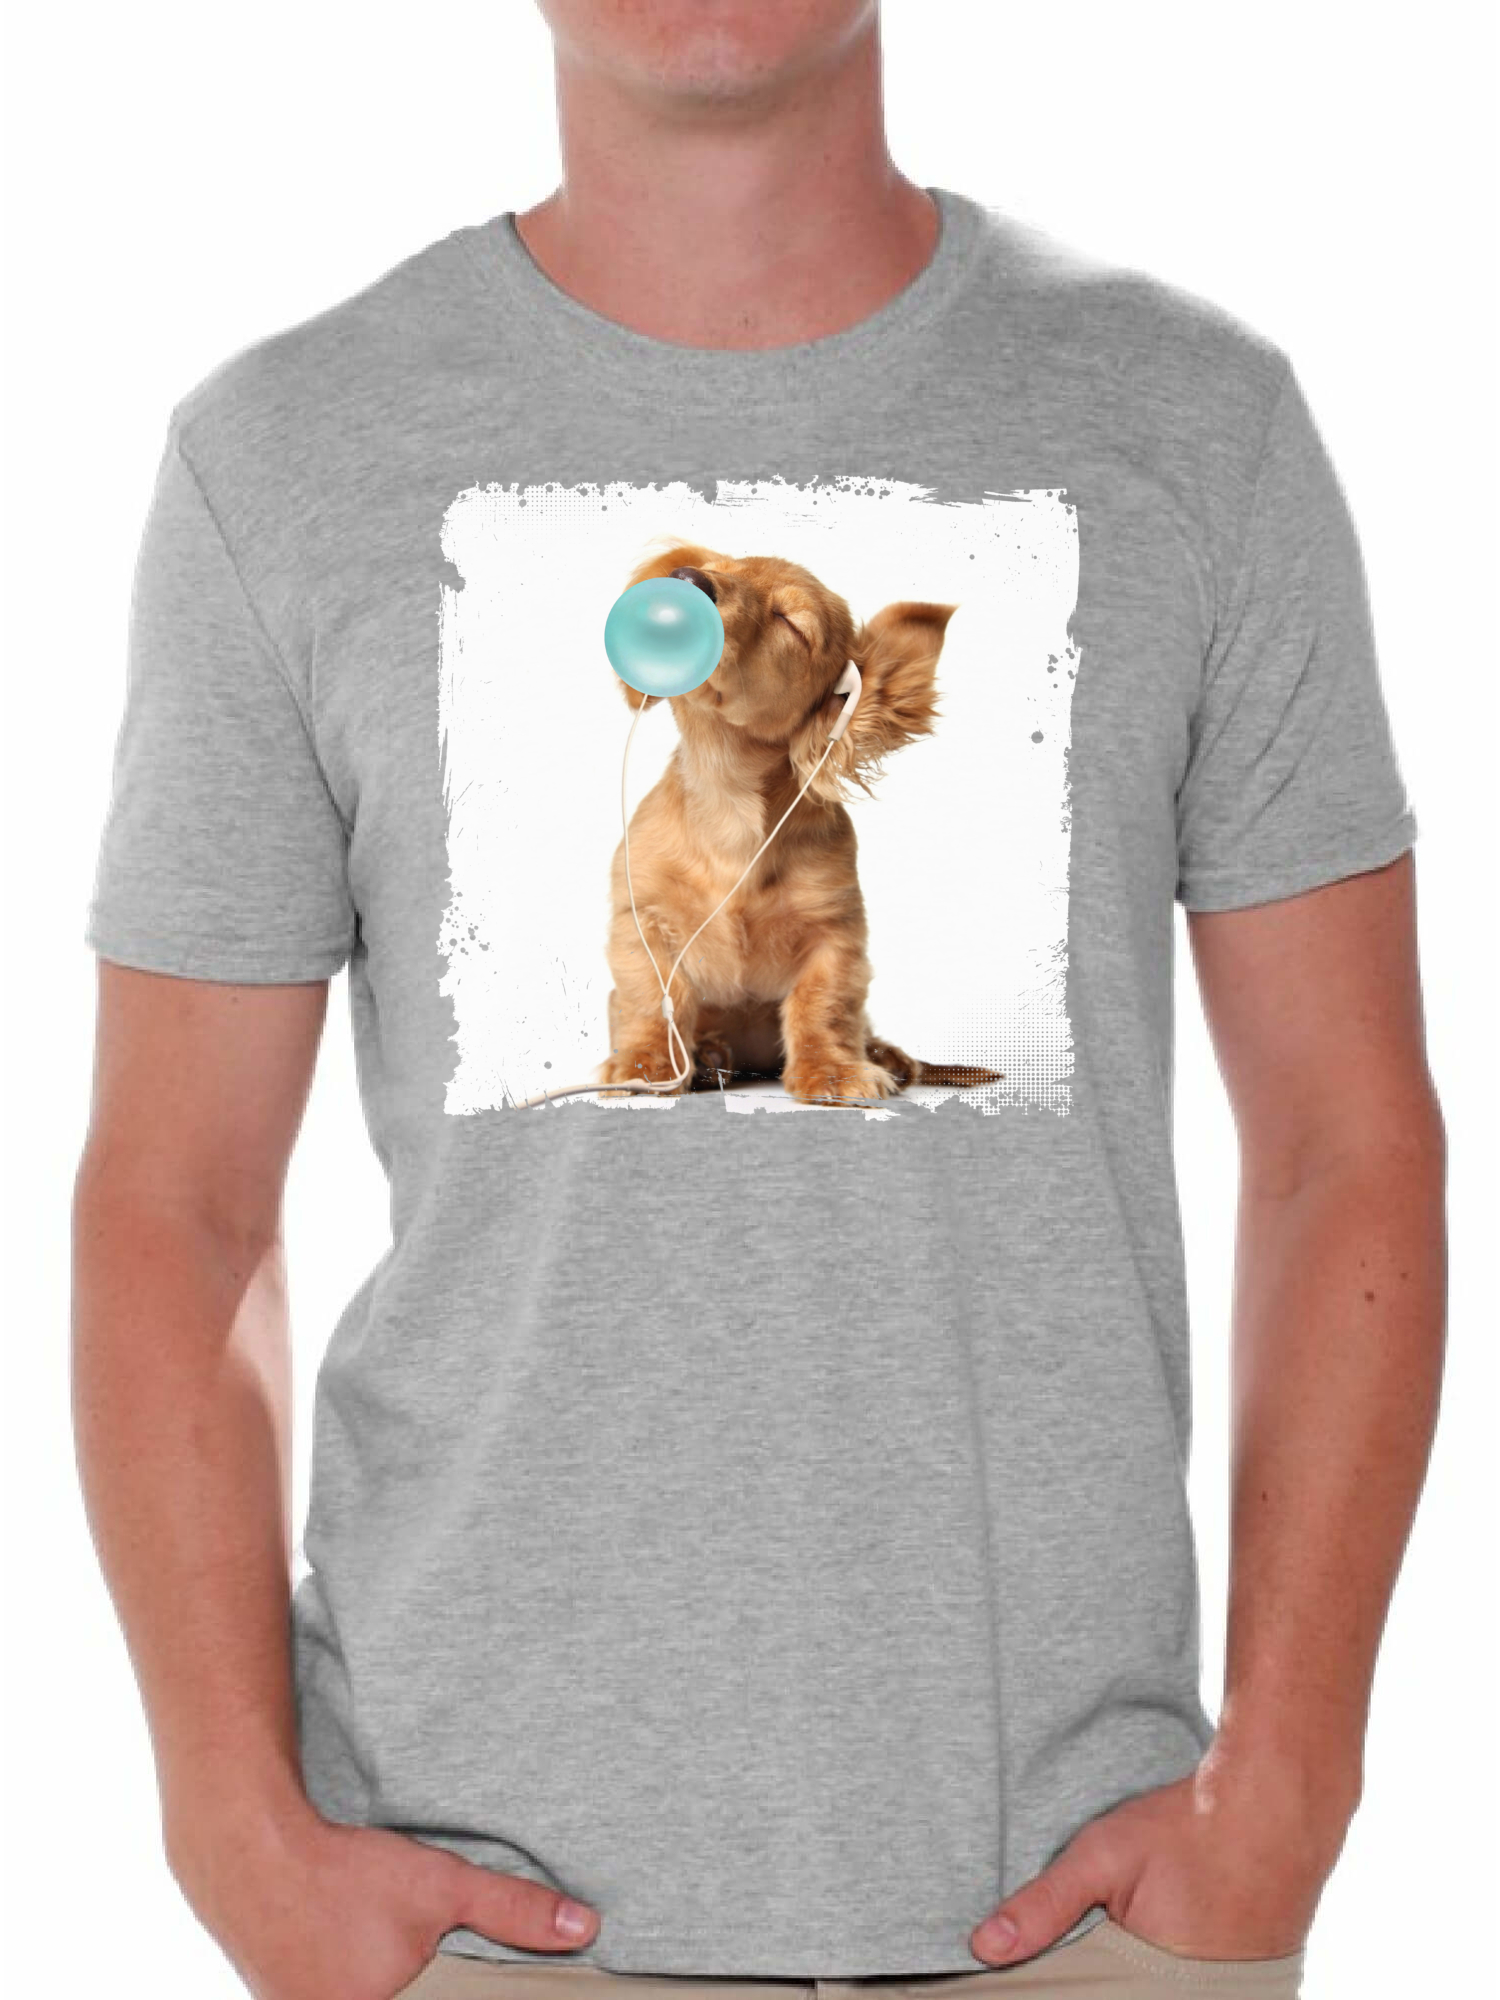 Awkward Styles Baby Dog Tshirt Puppy with Blue Gum T Shirt Dog Clothing Animal T-Shirt for Men Funny Animal Gifts DogT Shirt Cute Animal T Shirt Pug Shirt Cute Puppy Men Shirt Funny Animal Gifts - image 1 of 4